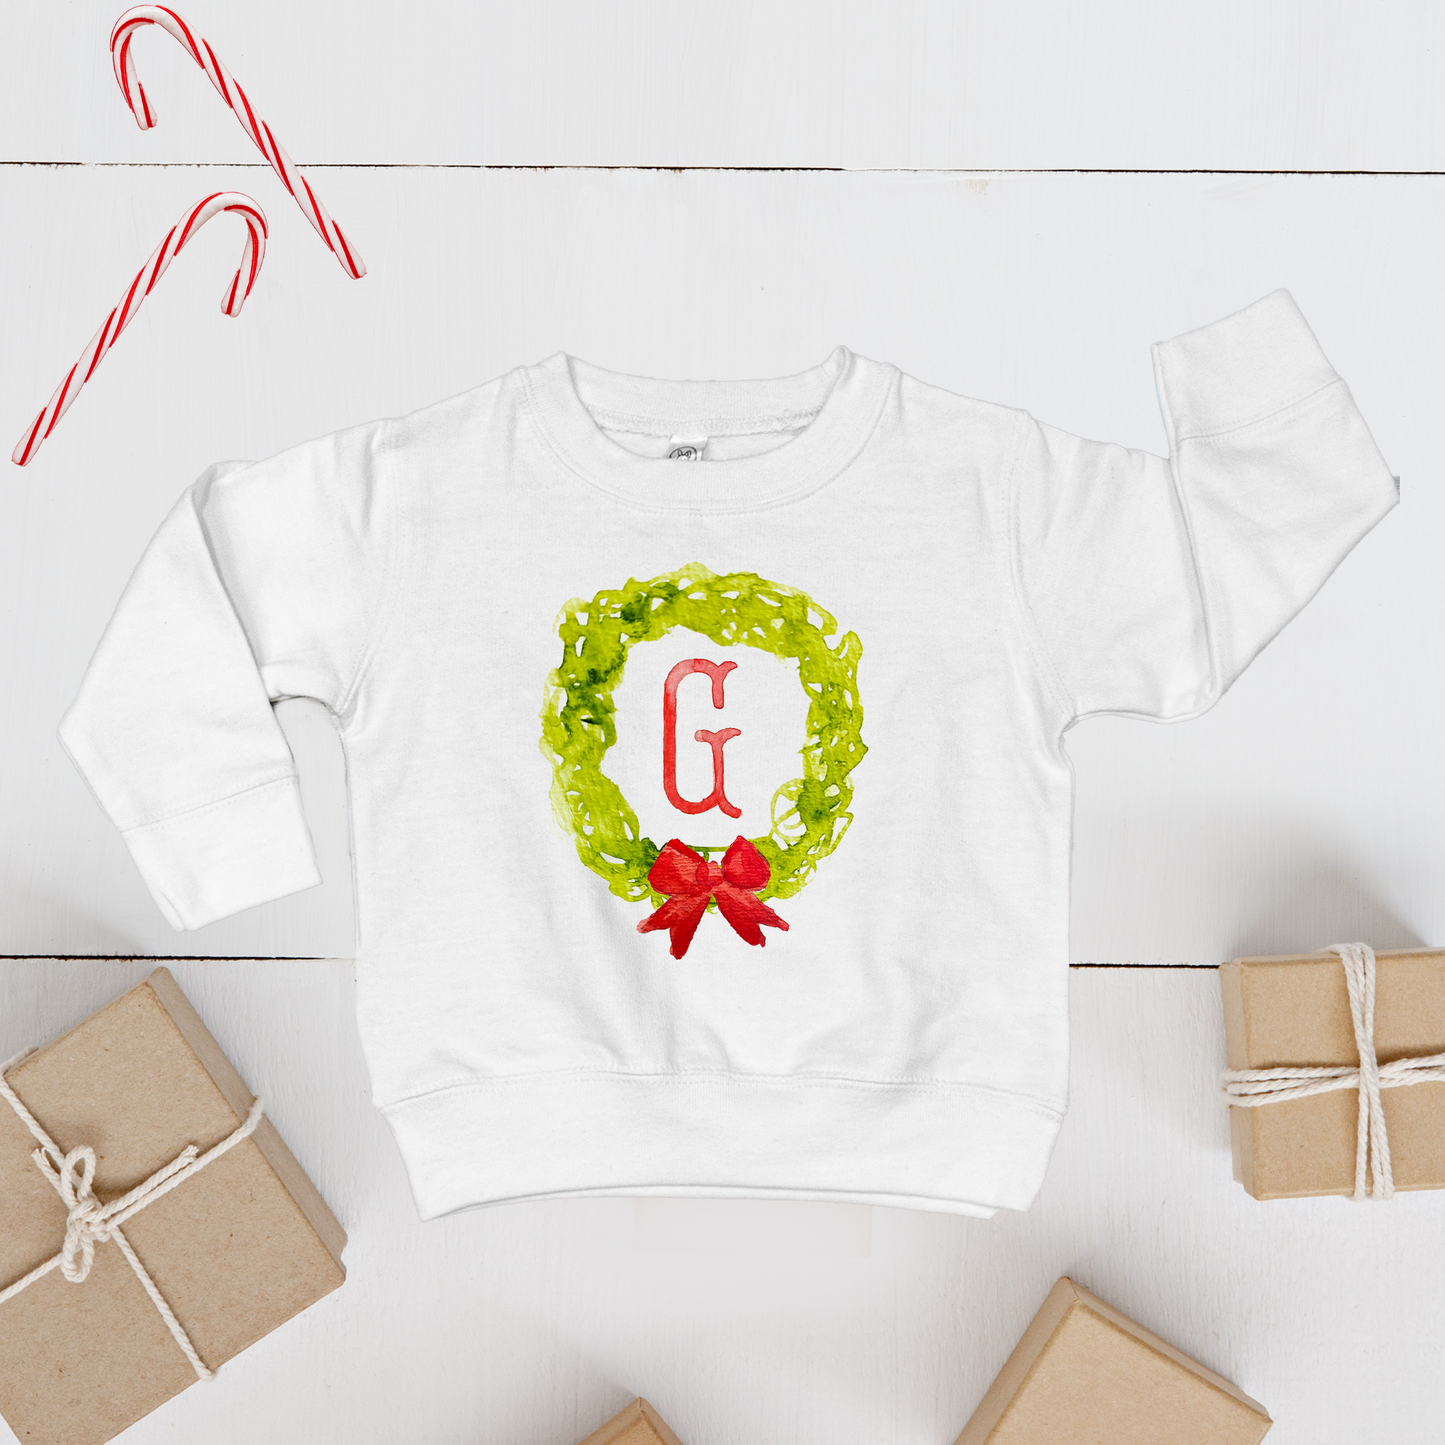 Monogram Wreath Toddler Sweatshirt